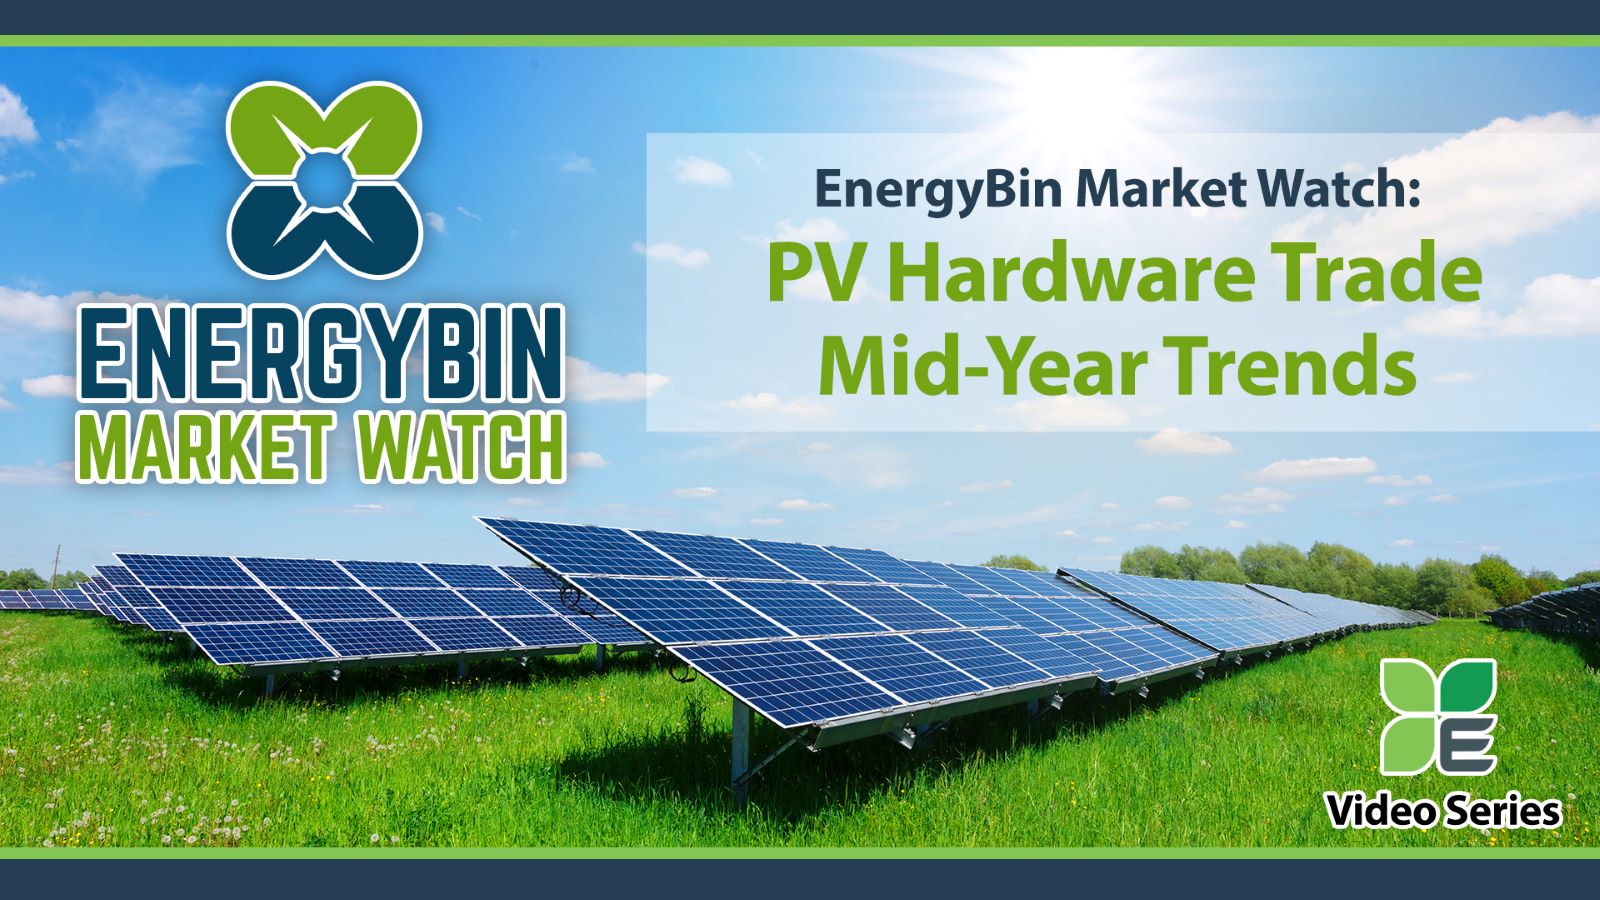 EnergyBin Market Watch - PV Hardware Trade Mid-Year Trends